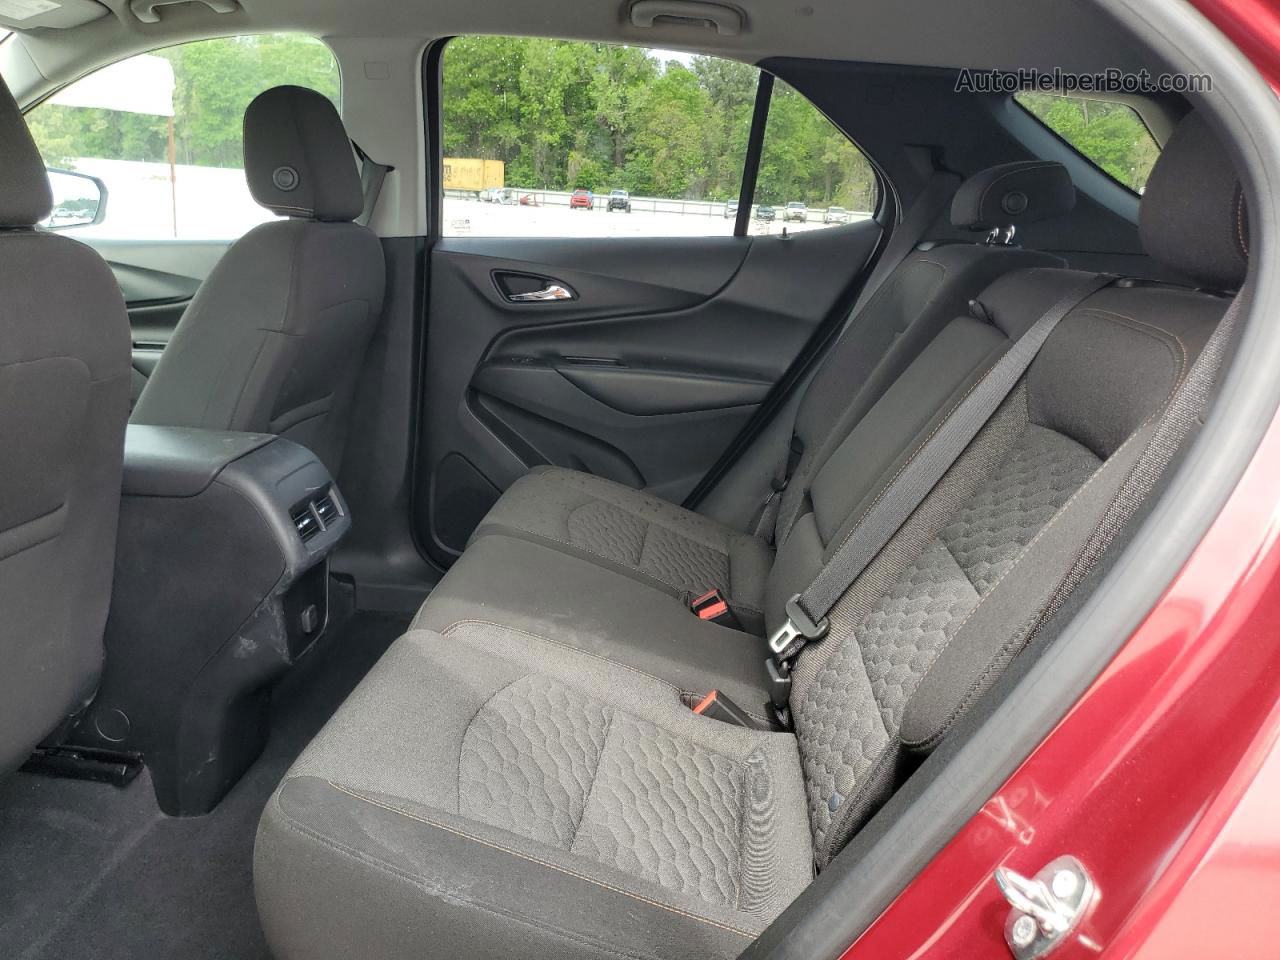 2018 Chevrolet Equinox Lt Red vin: 2GNAXJEV9J6261816